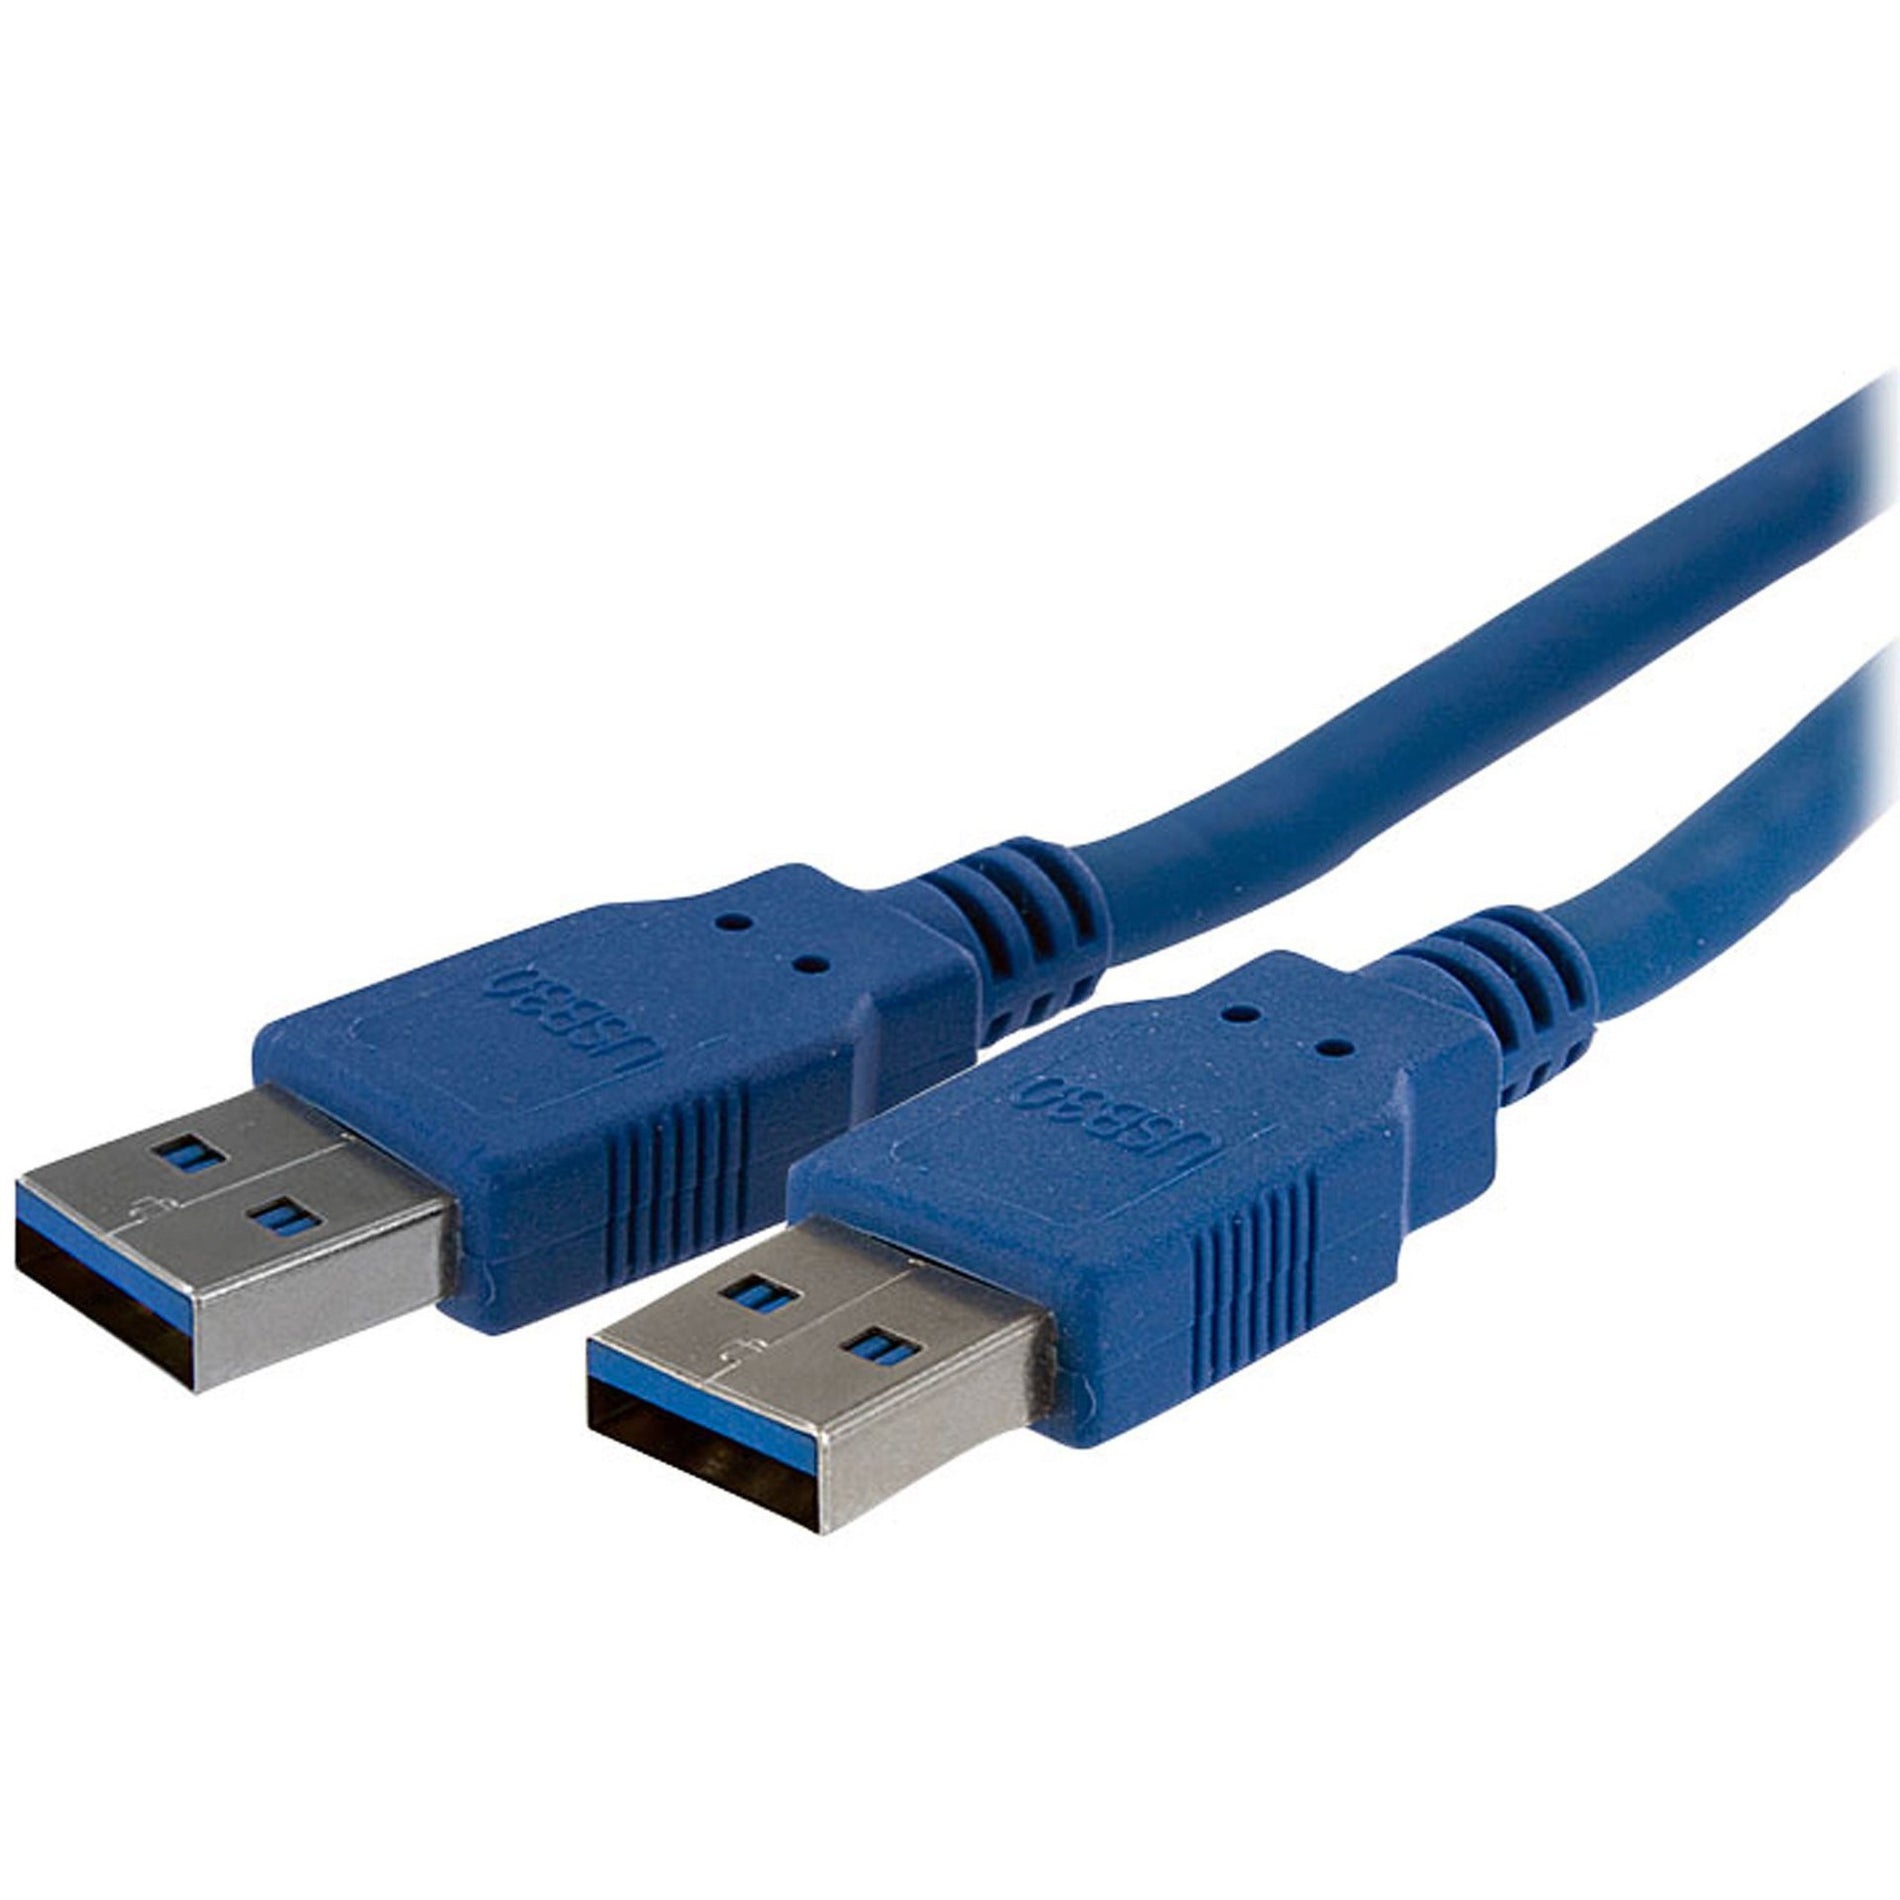 Marca: StarTech.com Cable USB 3.0 SuperSpeed de 6 pies A a A - M/M Transferencia de Datos de Alta Velocidad Protección contra EMI